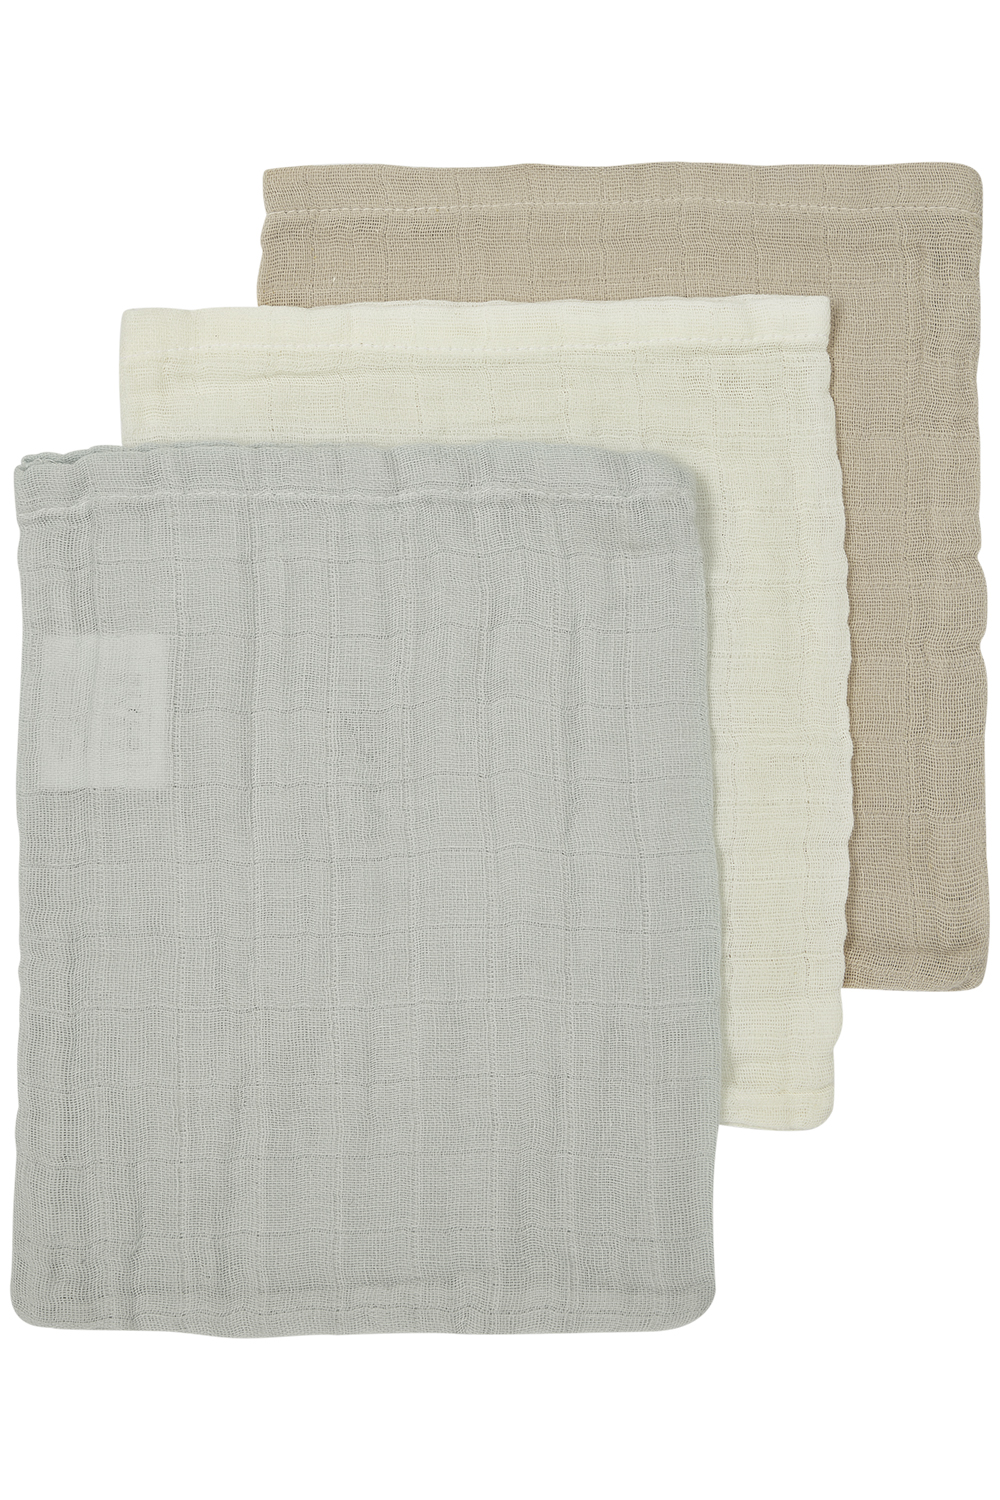 Washcloth 3-pack muslin Uni - offwhite/light grey/sand - 20x17cm